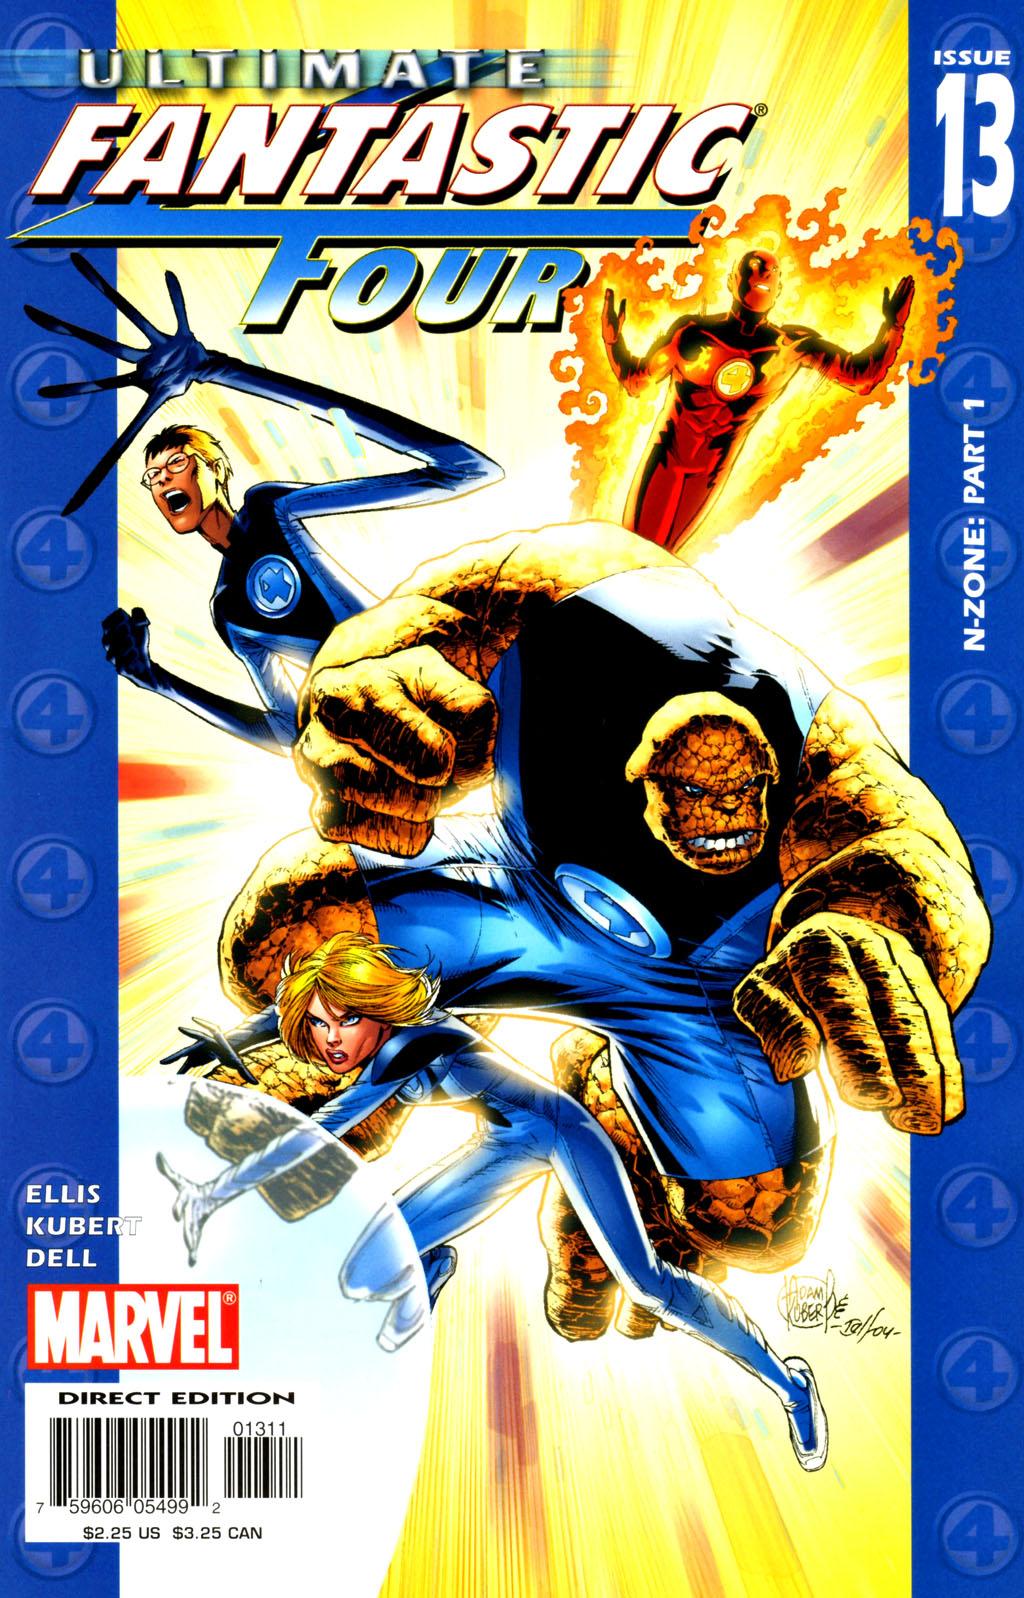 Ultimate Fantastic Four Vol. 1 #13